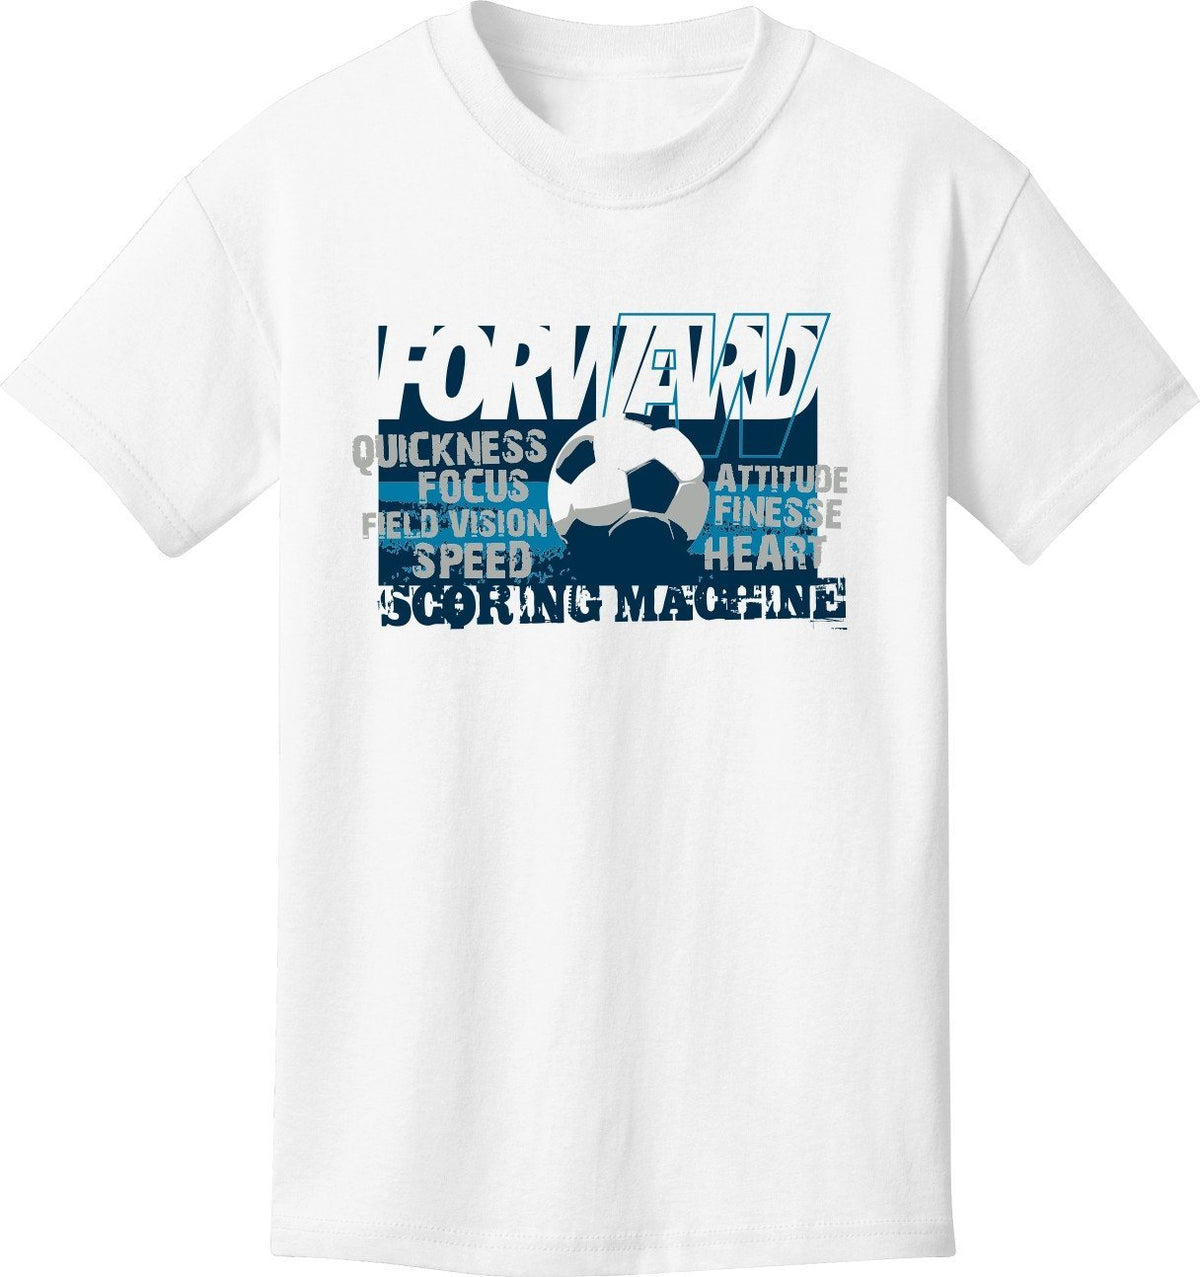 Utopia Forward Soccer Scoring Machine Short Sleeve Soccer T-Shirt Humorous Shirt Utopia Adult Small White 